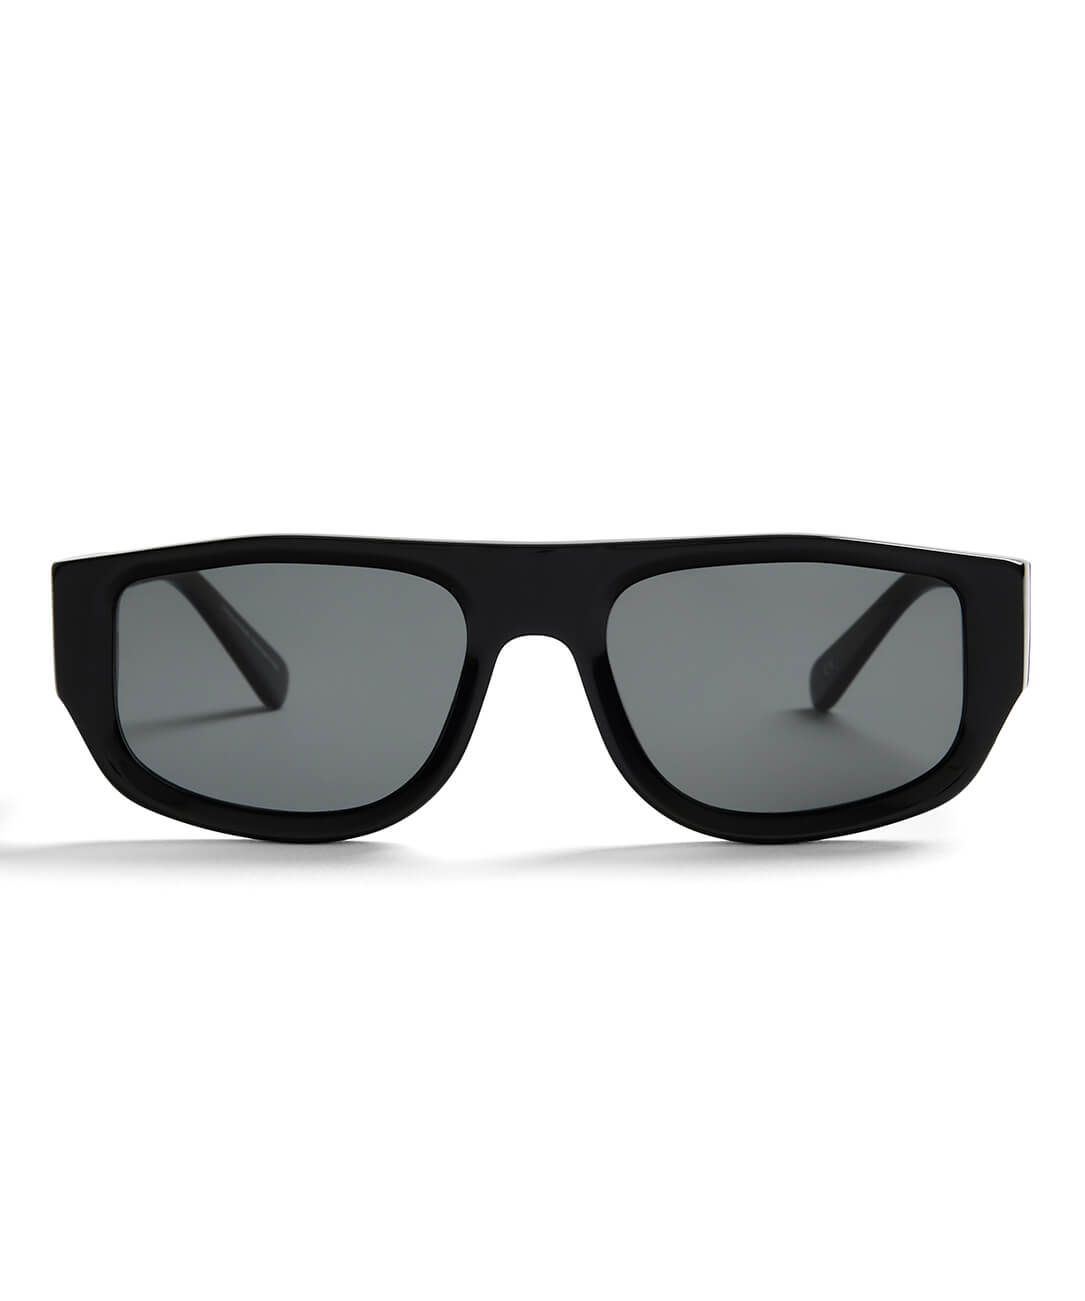 Sunglasses Nightcore Black Gray, Statement Collection